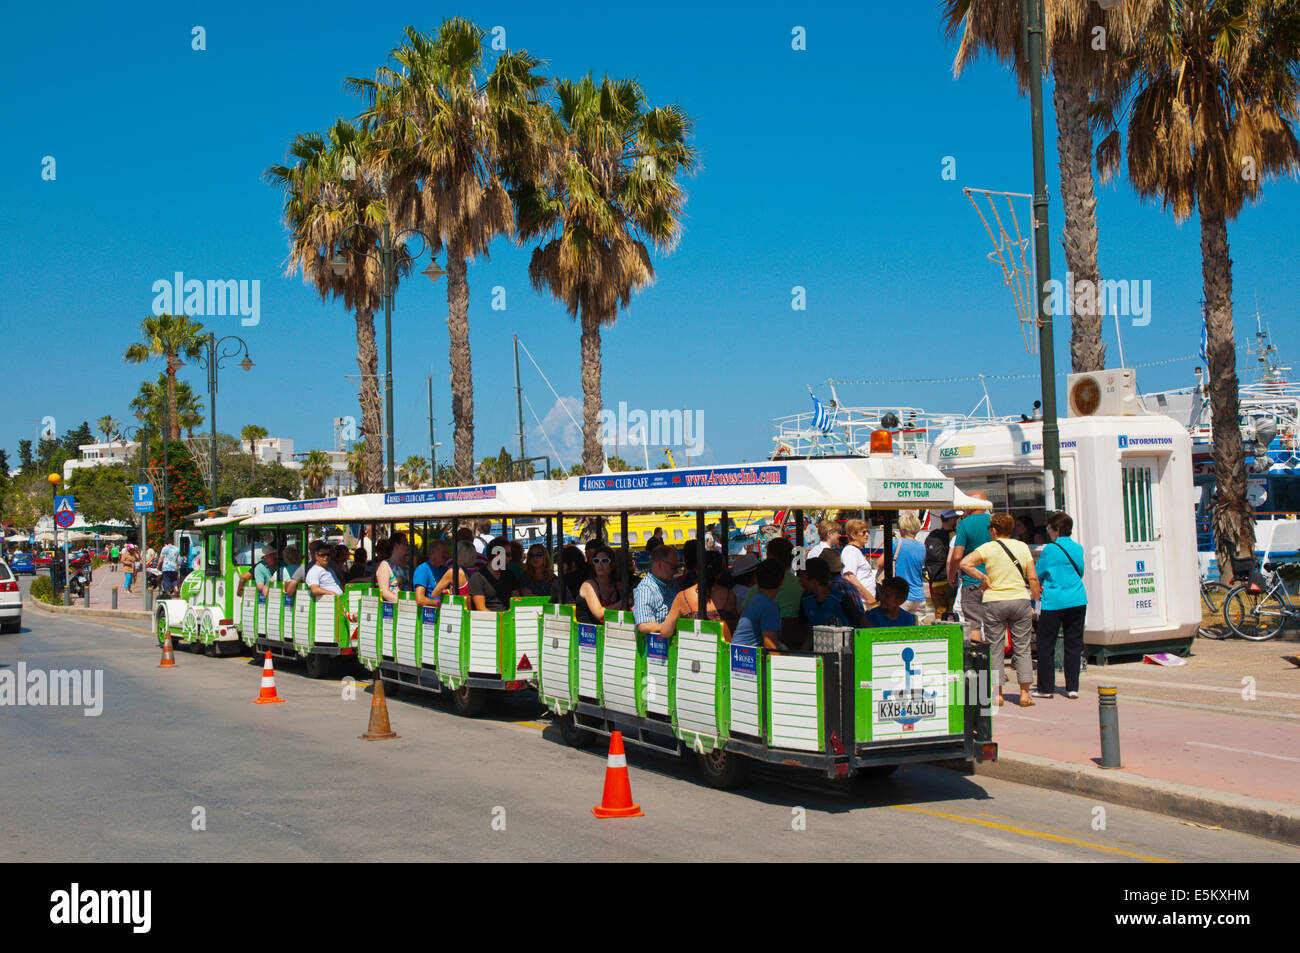 City tour tourist train, harbourside promenade, Kos town, Kos island, Dodecanese islands, Greece, Europe Stock Photo